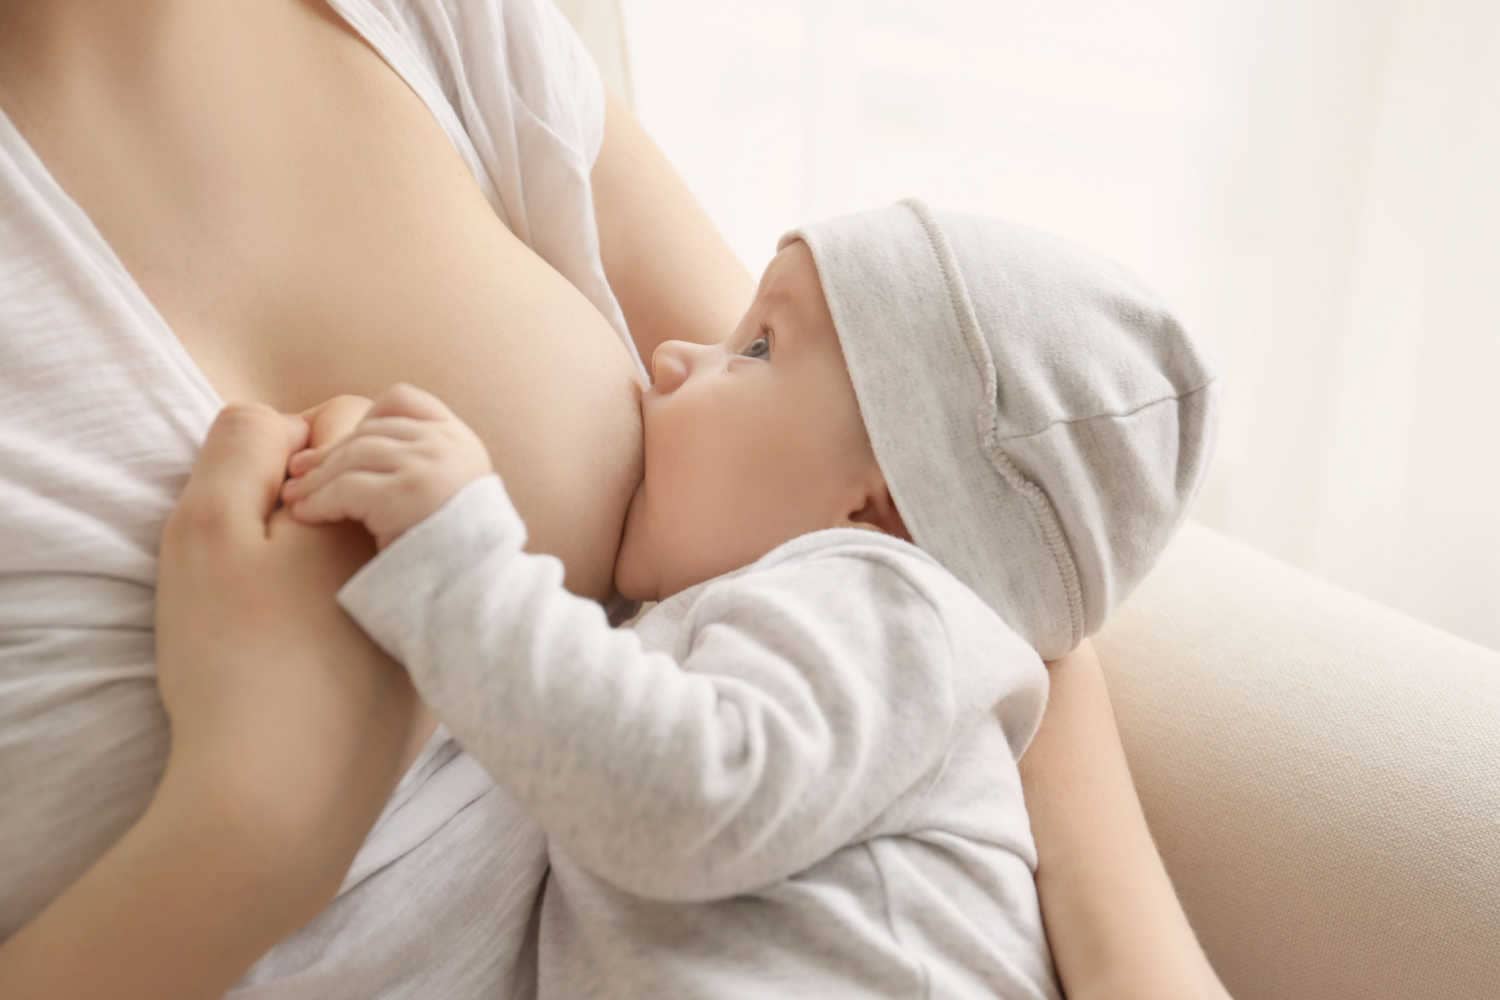 Biting During Breastfeeding